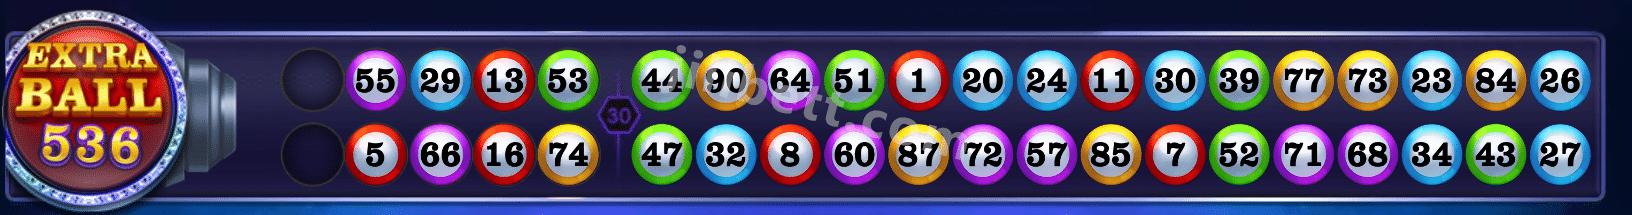 Super Bingo Extra Ball-01